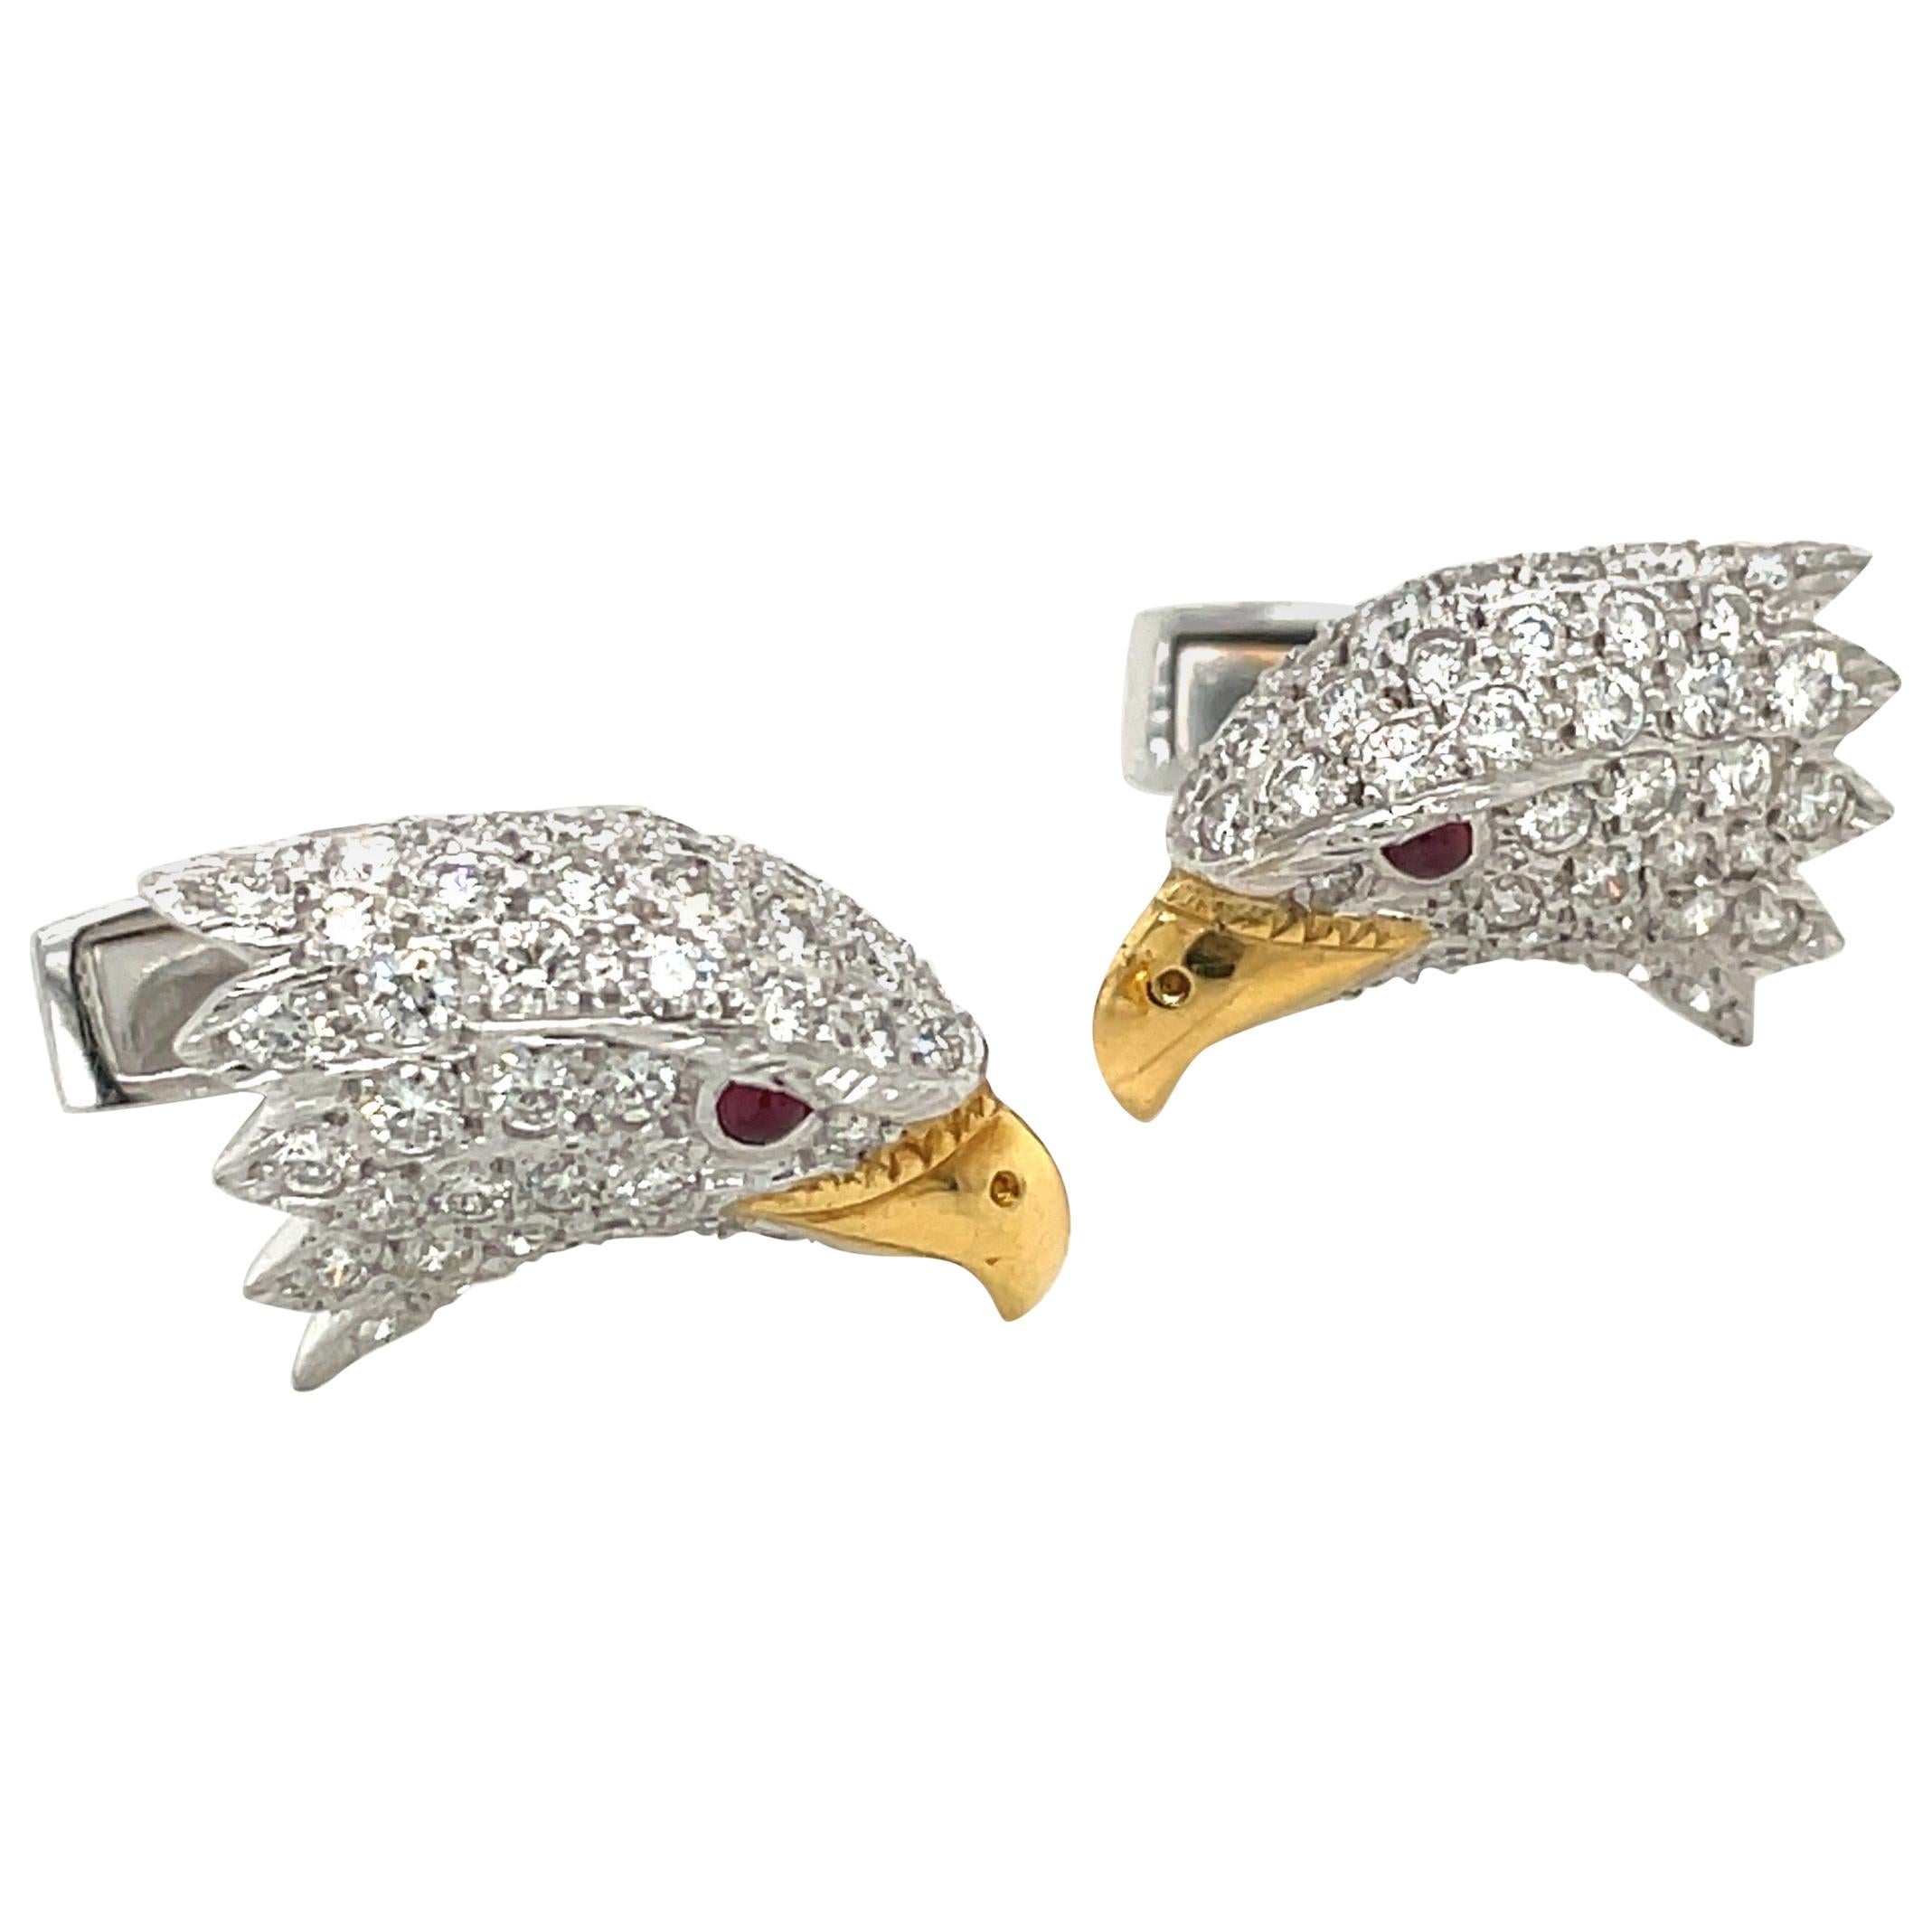 E. Wolfe & Co. 18kt White Gold Diamond 2.55ct Eagle Head Cuff Links